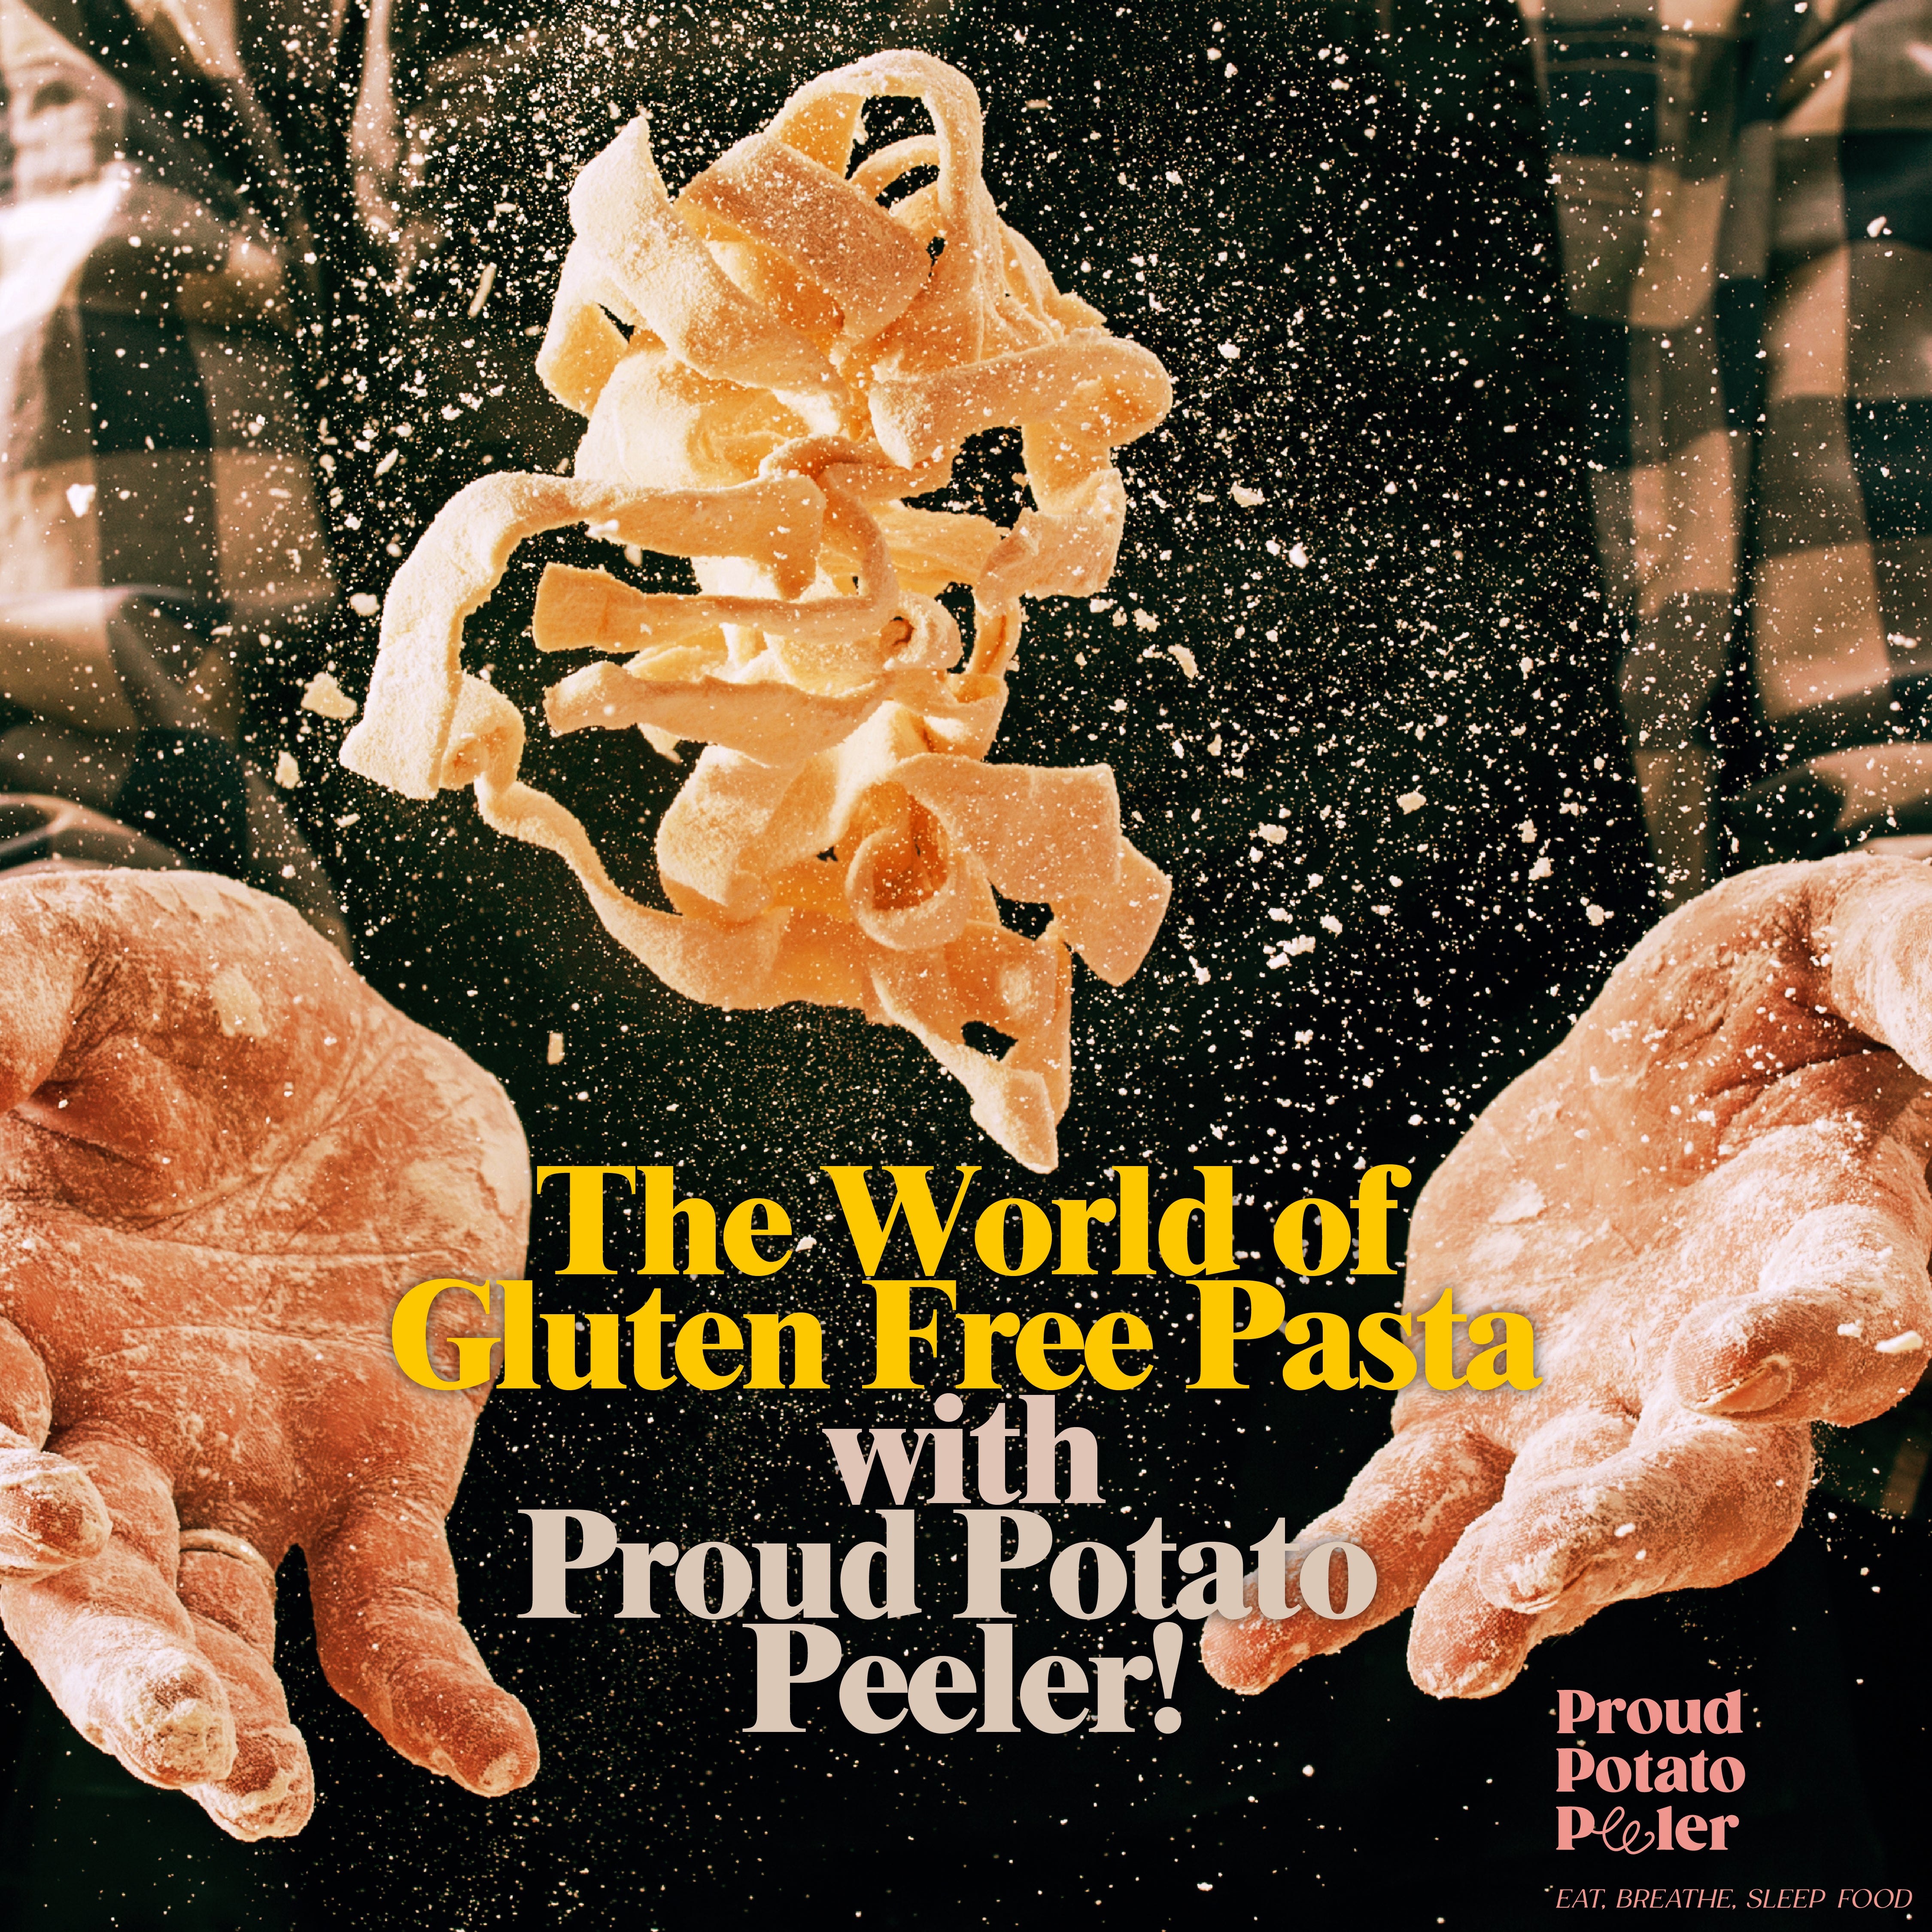 The World of Gluten Free Pasta with Proud Potato Peeler!